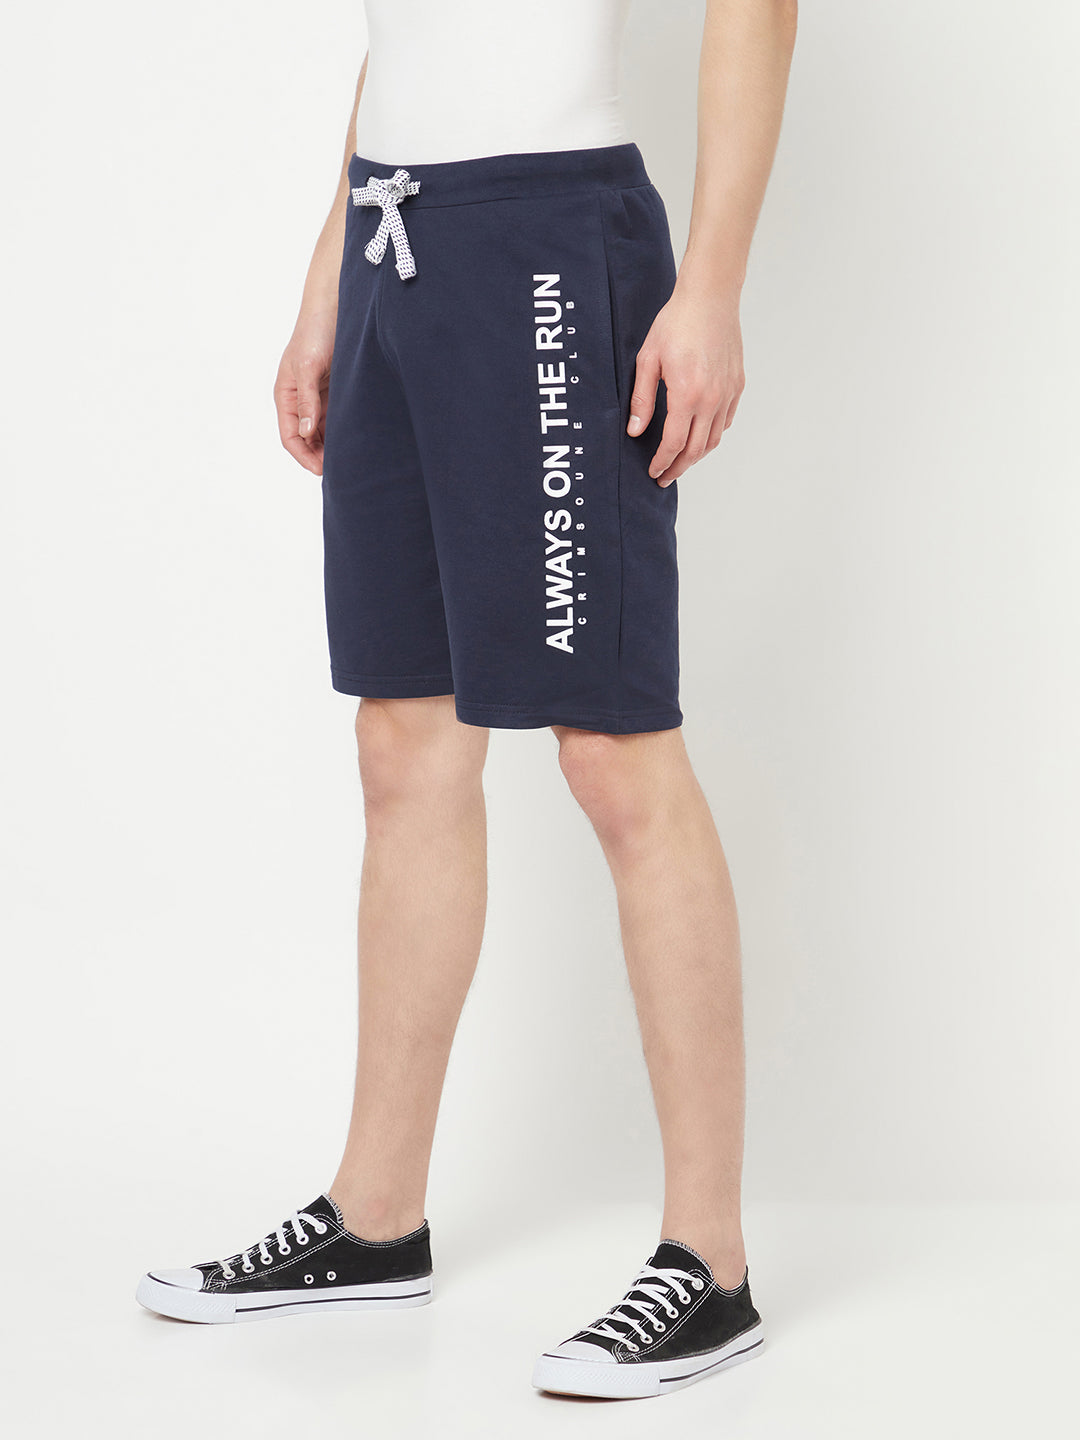 Navy Blue Printed Sports Shorts - Men Shorts